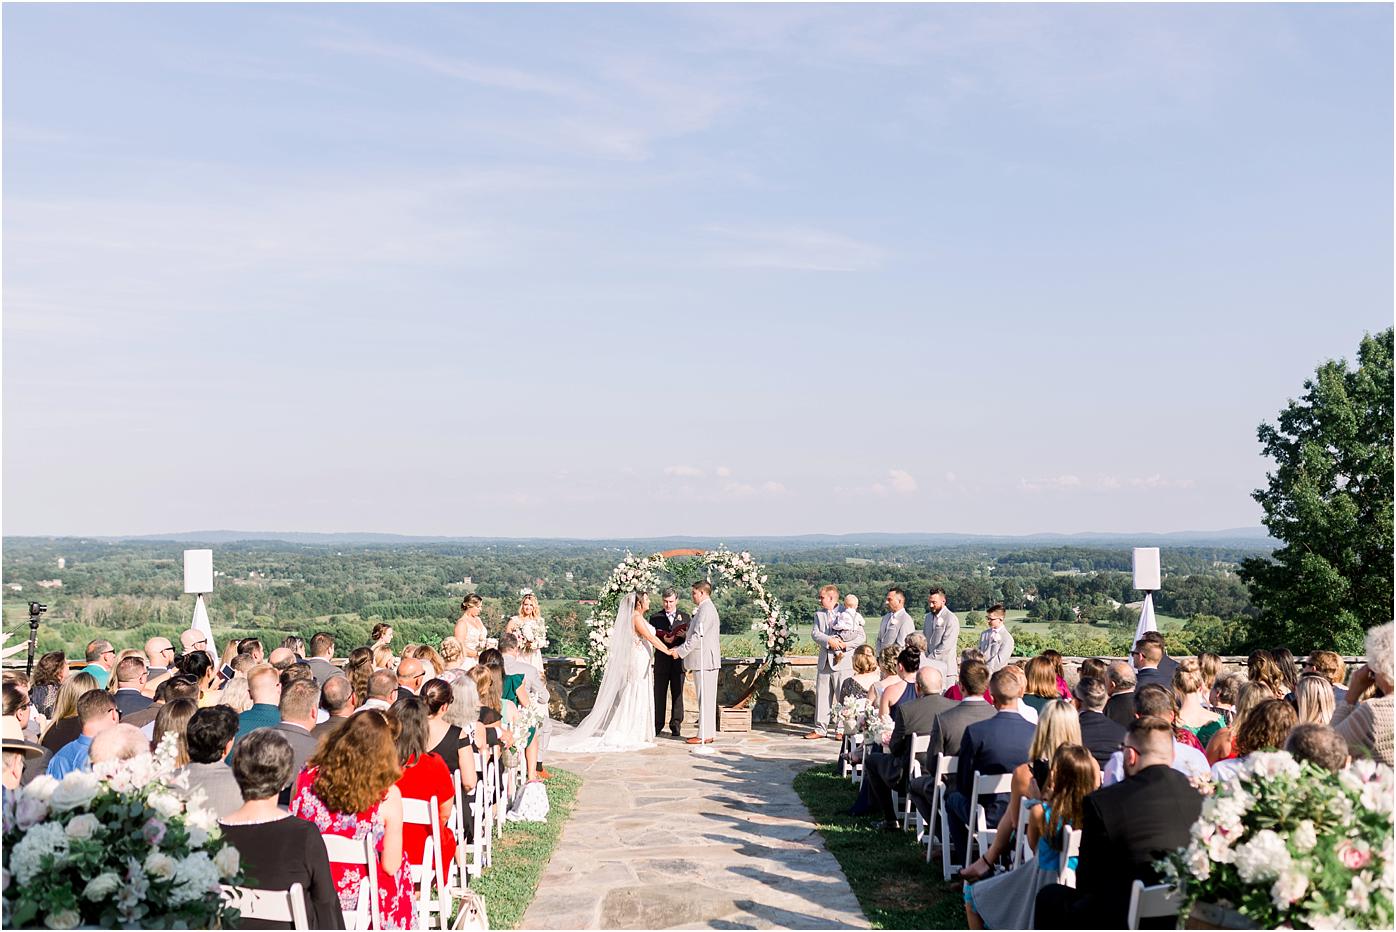 Stunning views at Bluemont Vineyard Wedding ceremony site